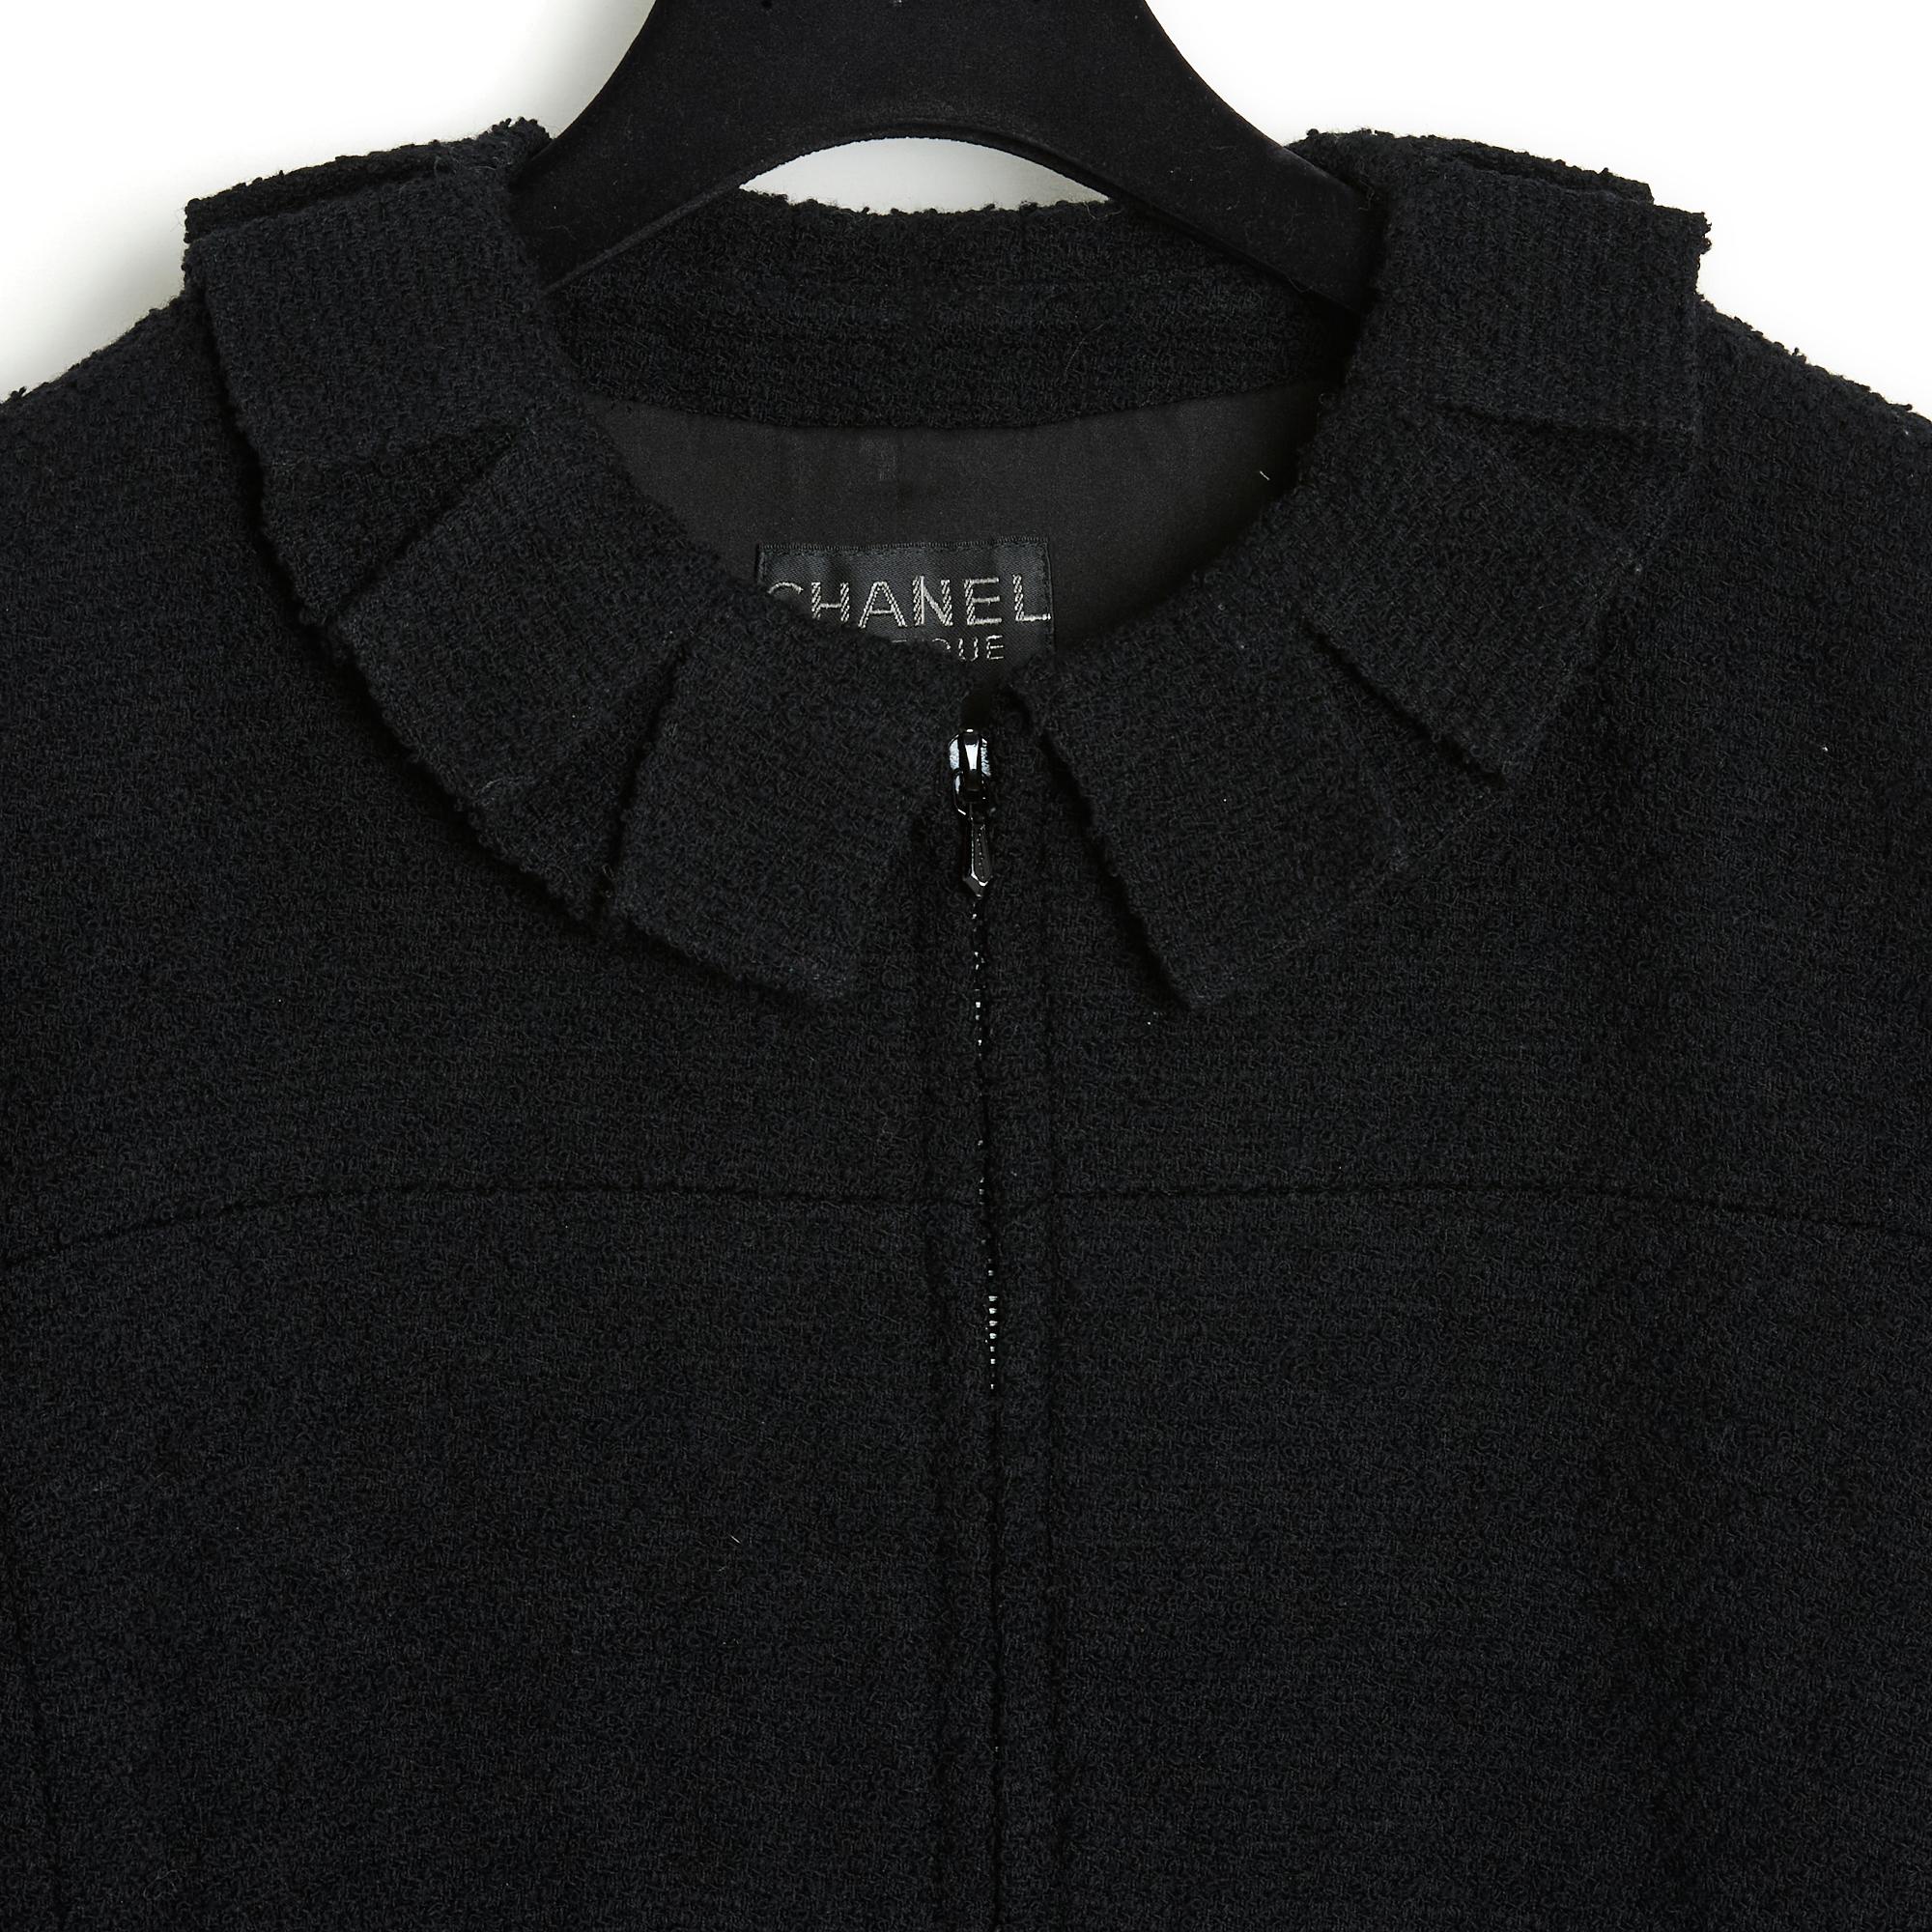 FW 1997 Chanel Jacket Black FR40 Ensemble For Sale 2